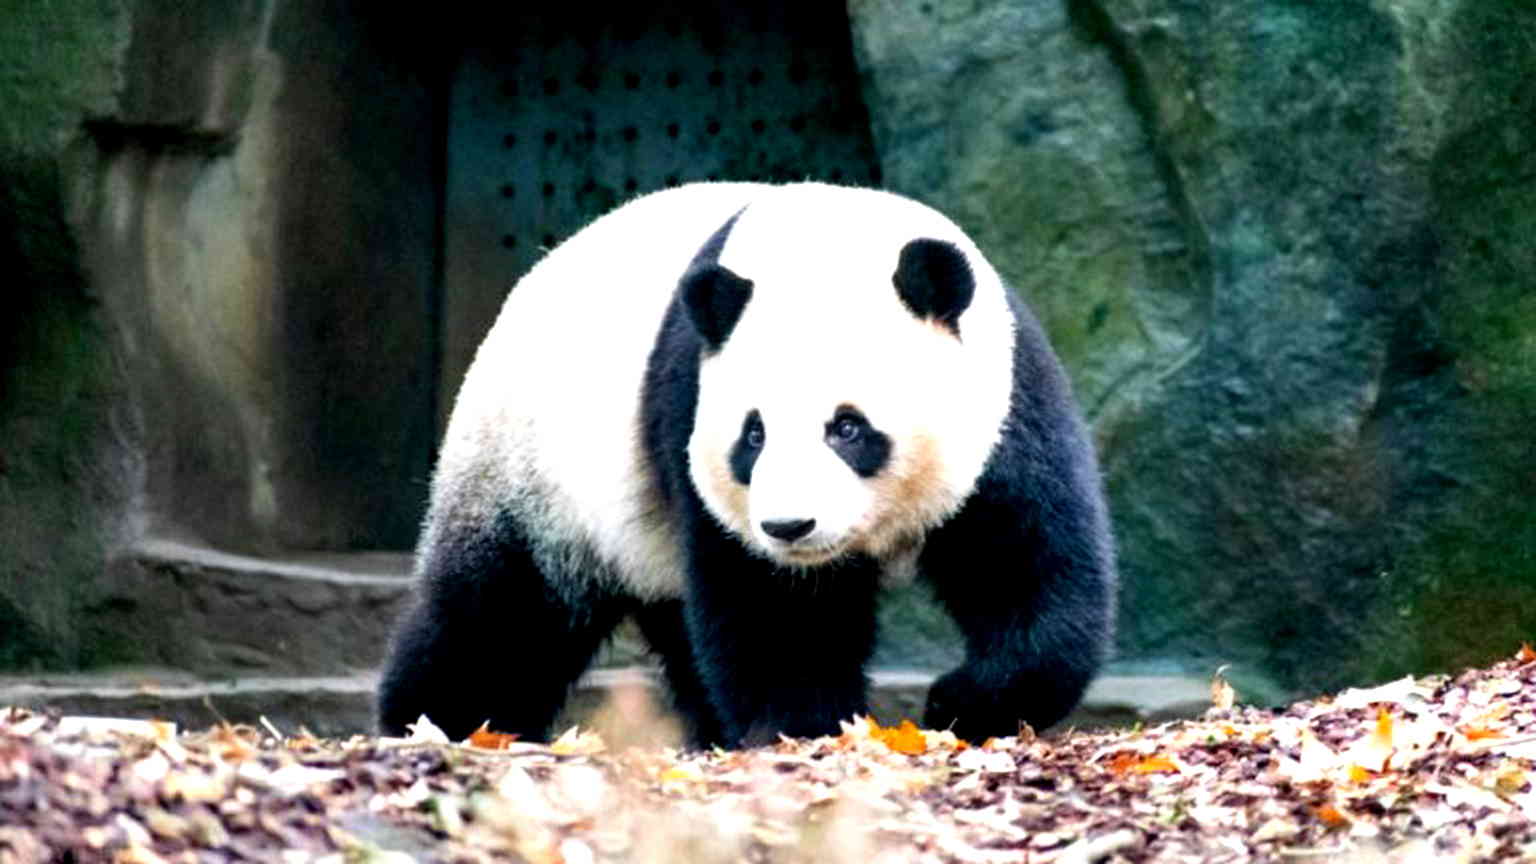 China to send 2 giant pandas to San Diego Zoo this year